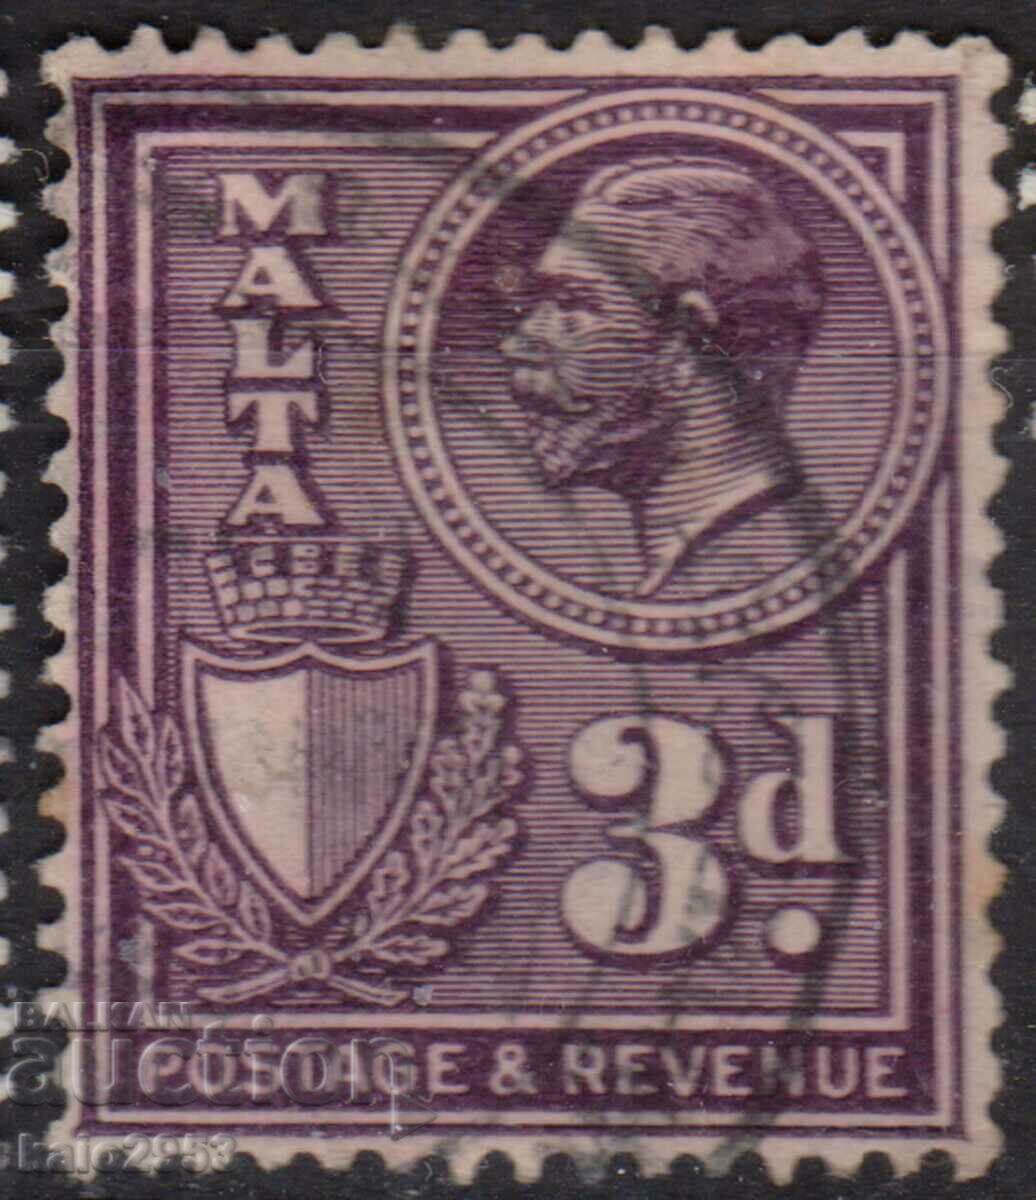 GB/Malta-1930-Regular-KE V+stamp-"Postage/Revenue", stamp